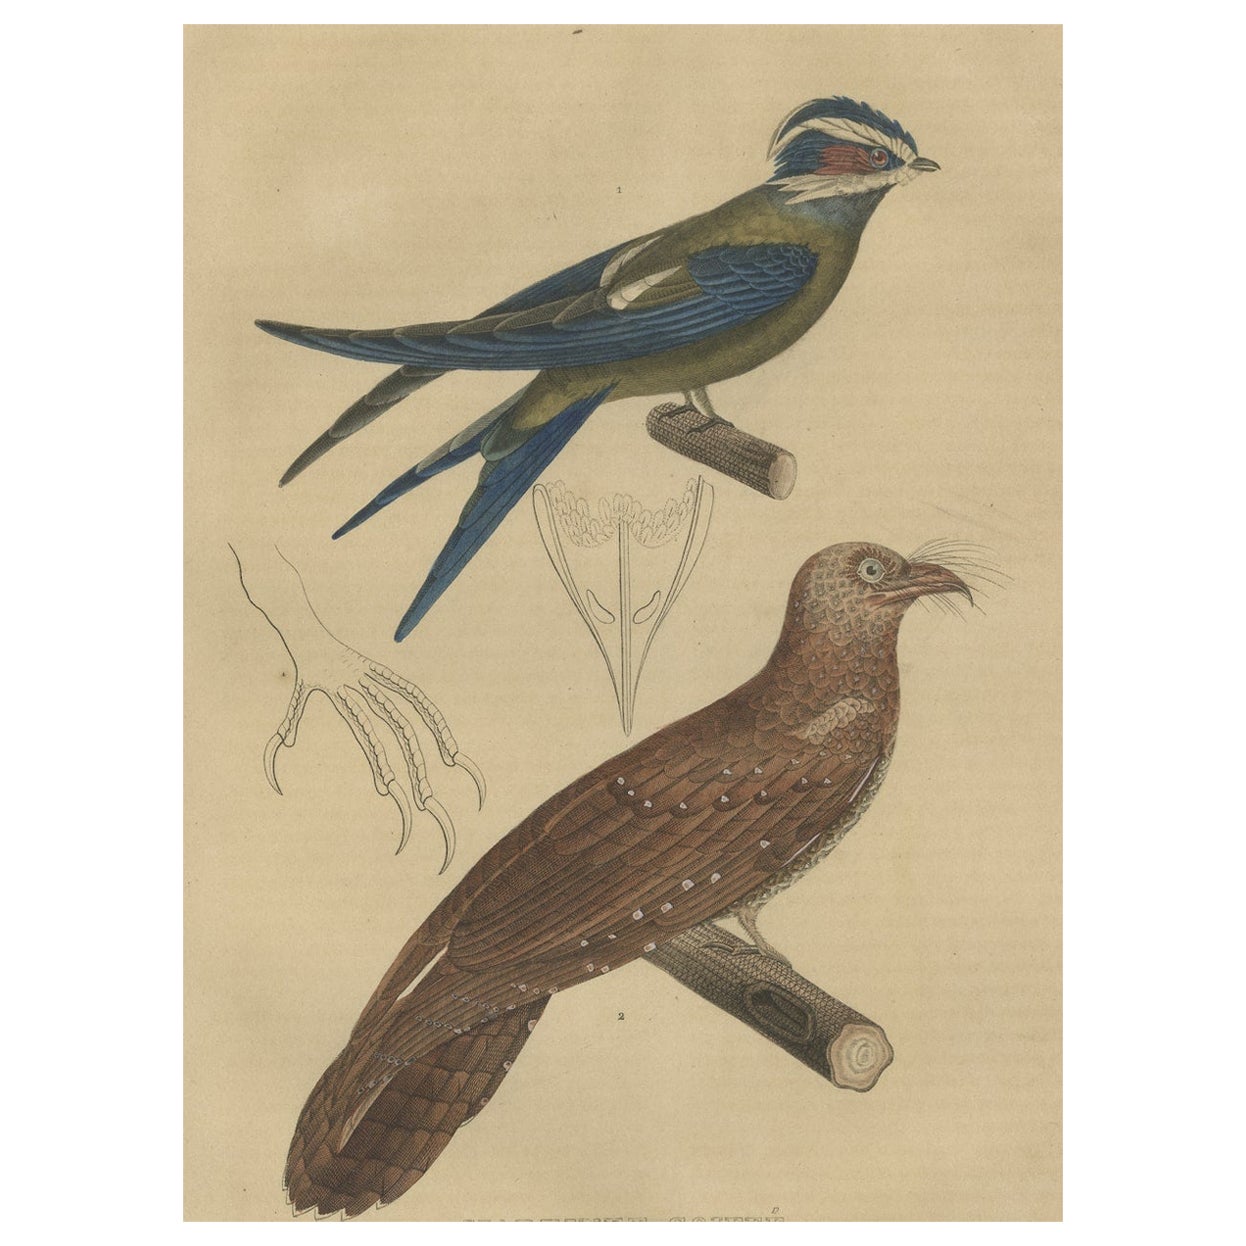 Original Hand-Colored Bird Print of an Oilbird and a Crested Swift